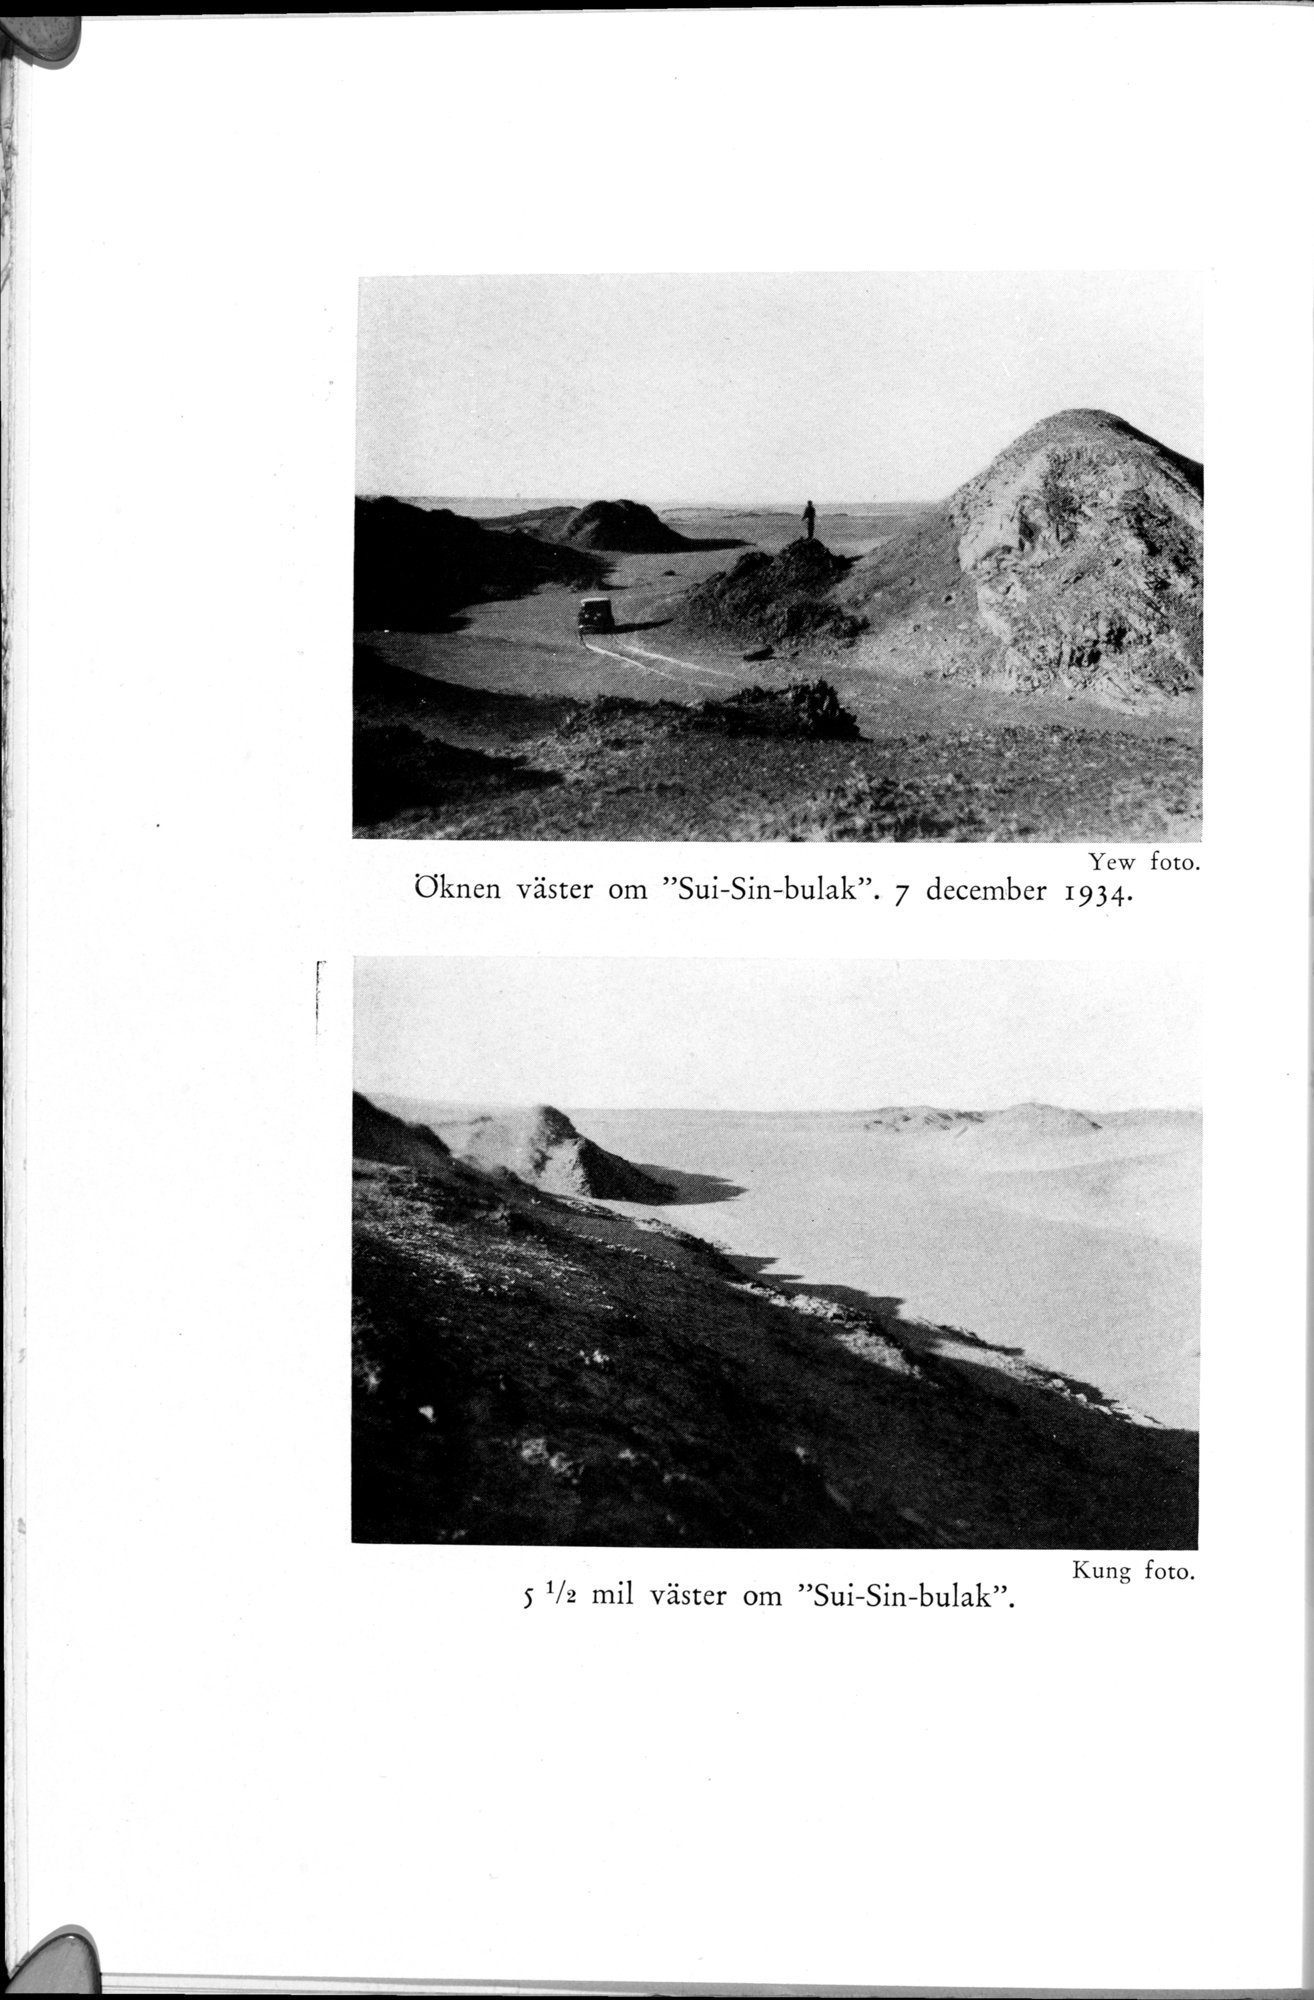 Den Vandrande Sjön : vol.1 / Page 284 (Grayscale High Resolution Image)